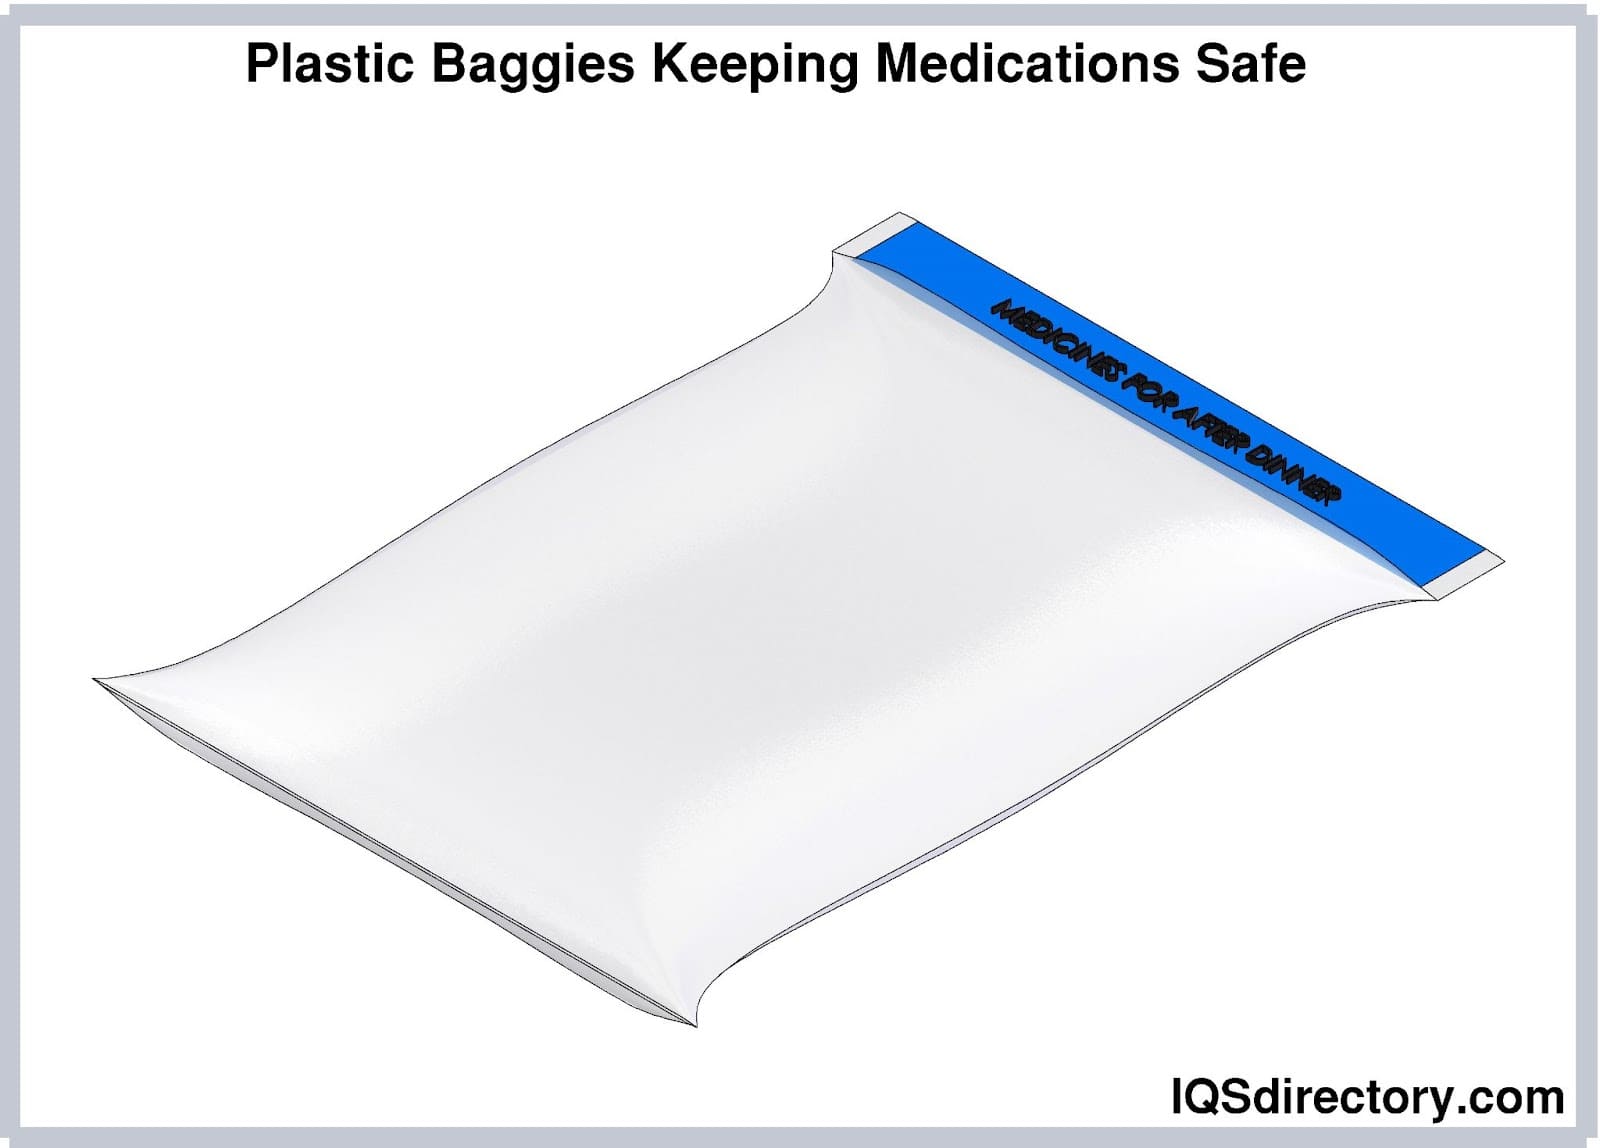 Plastic Baggies Keeping Medications Safe